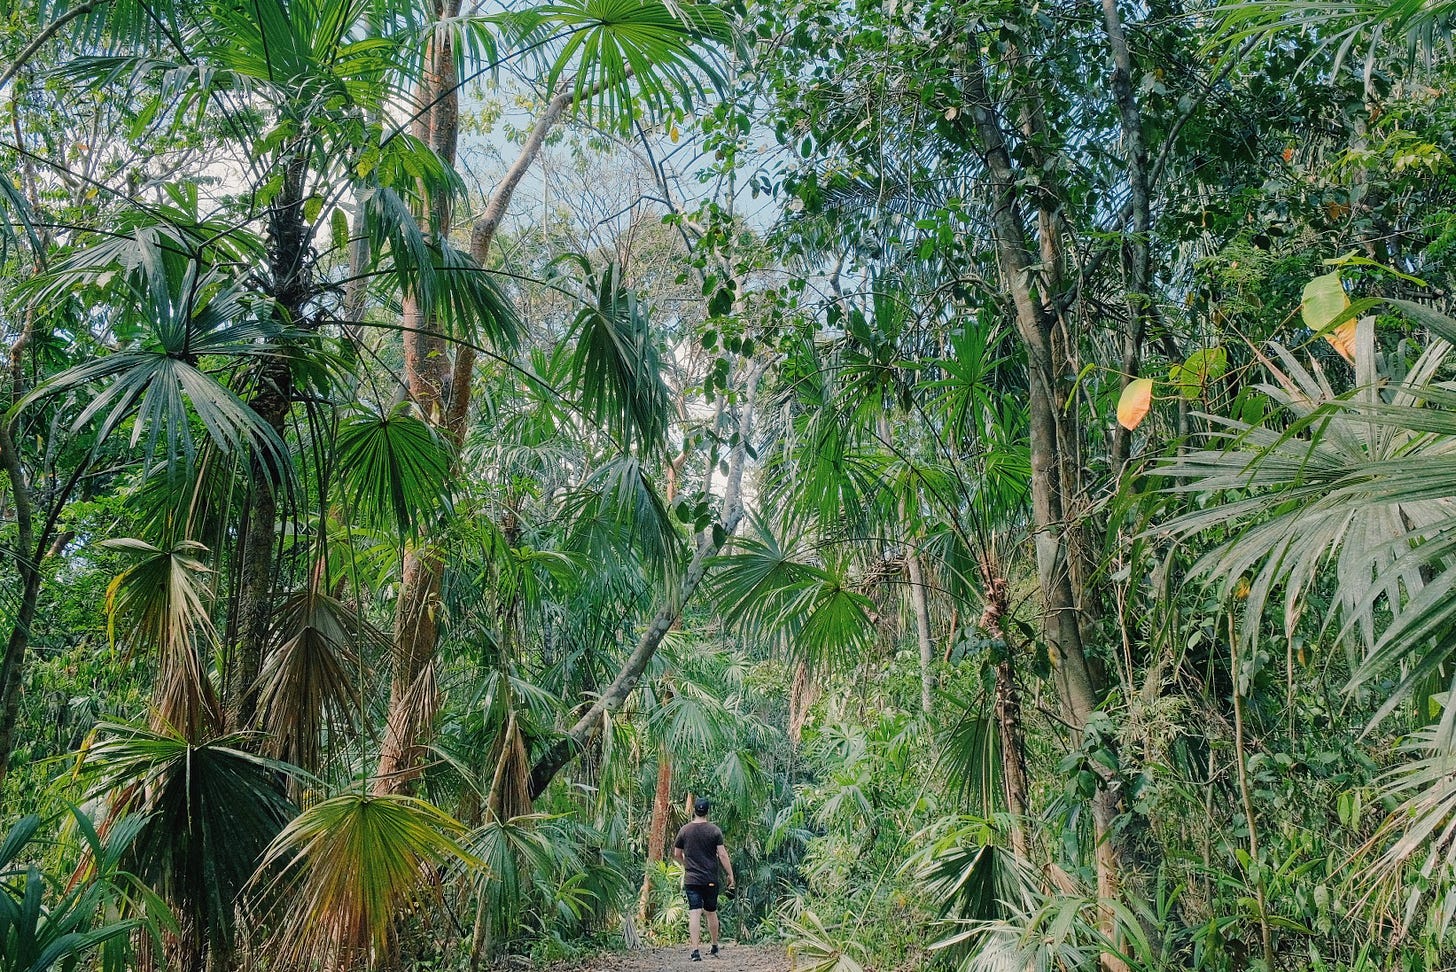 Dustin walking on a trail through the rainforest.